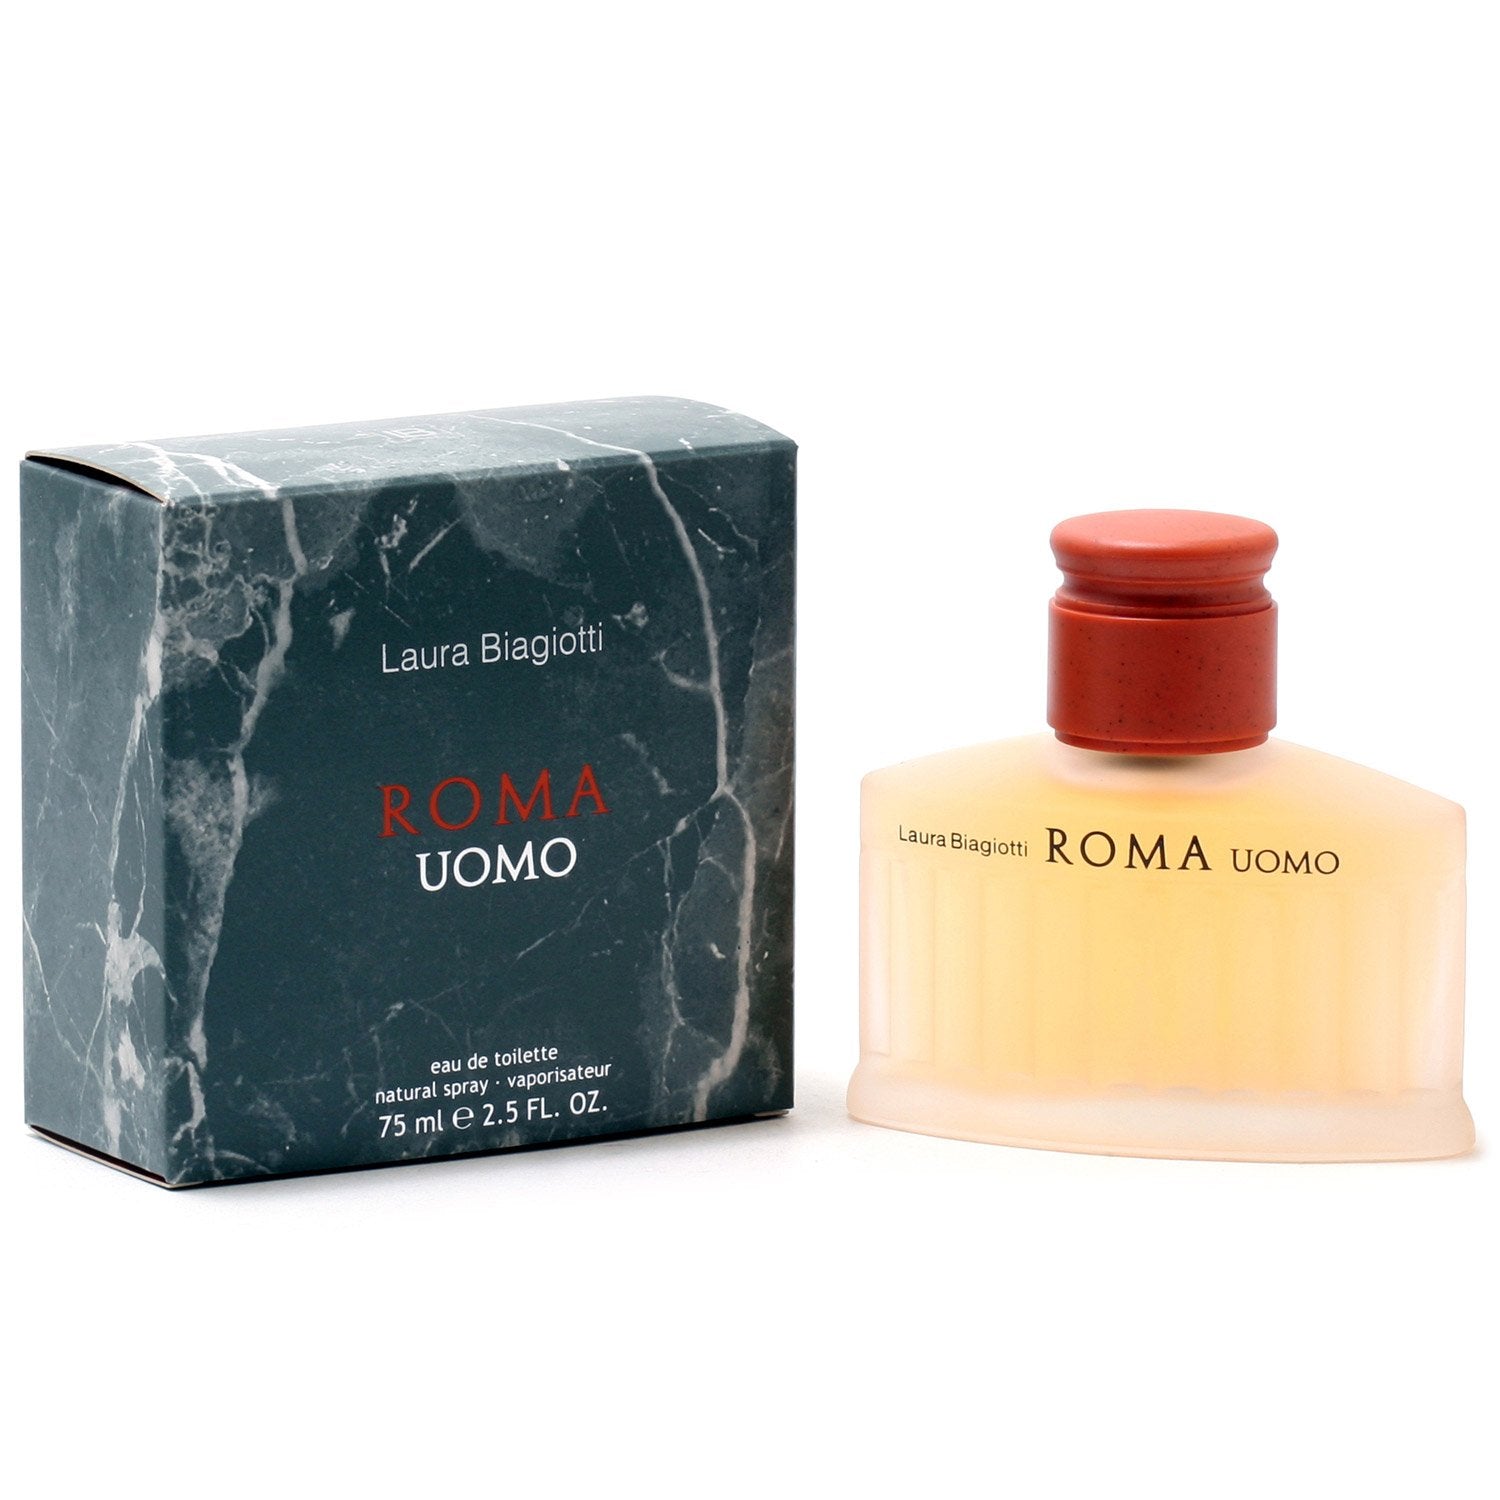 ROMA UOMO FOR MEN – DE Fragrance 2.5 SPRAY, LAURA OZ - BY TOILETTE EAU Room BIAGIOTTI